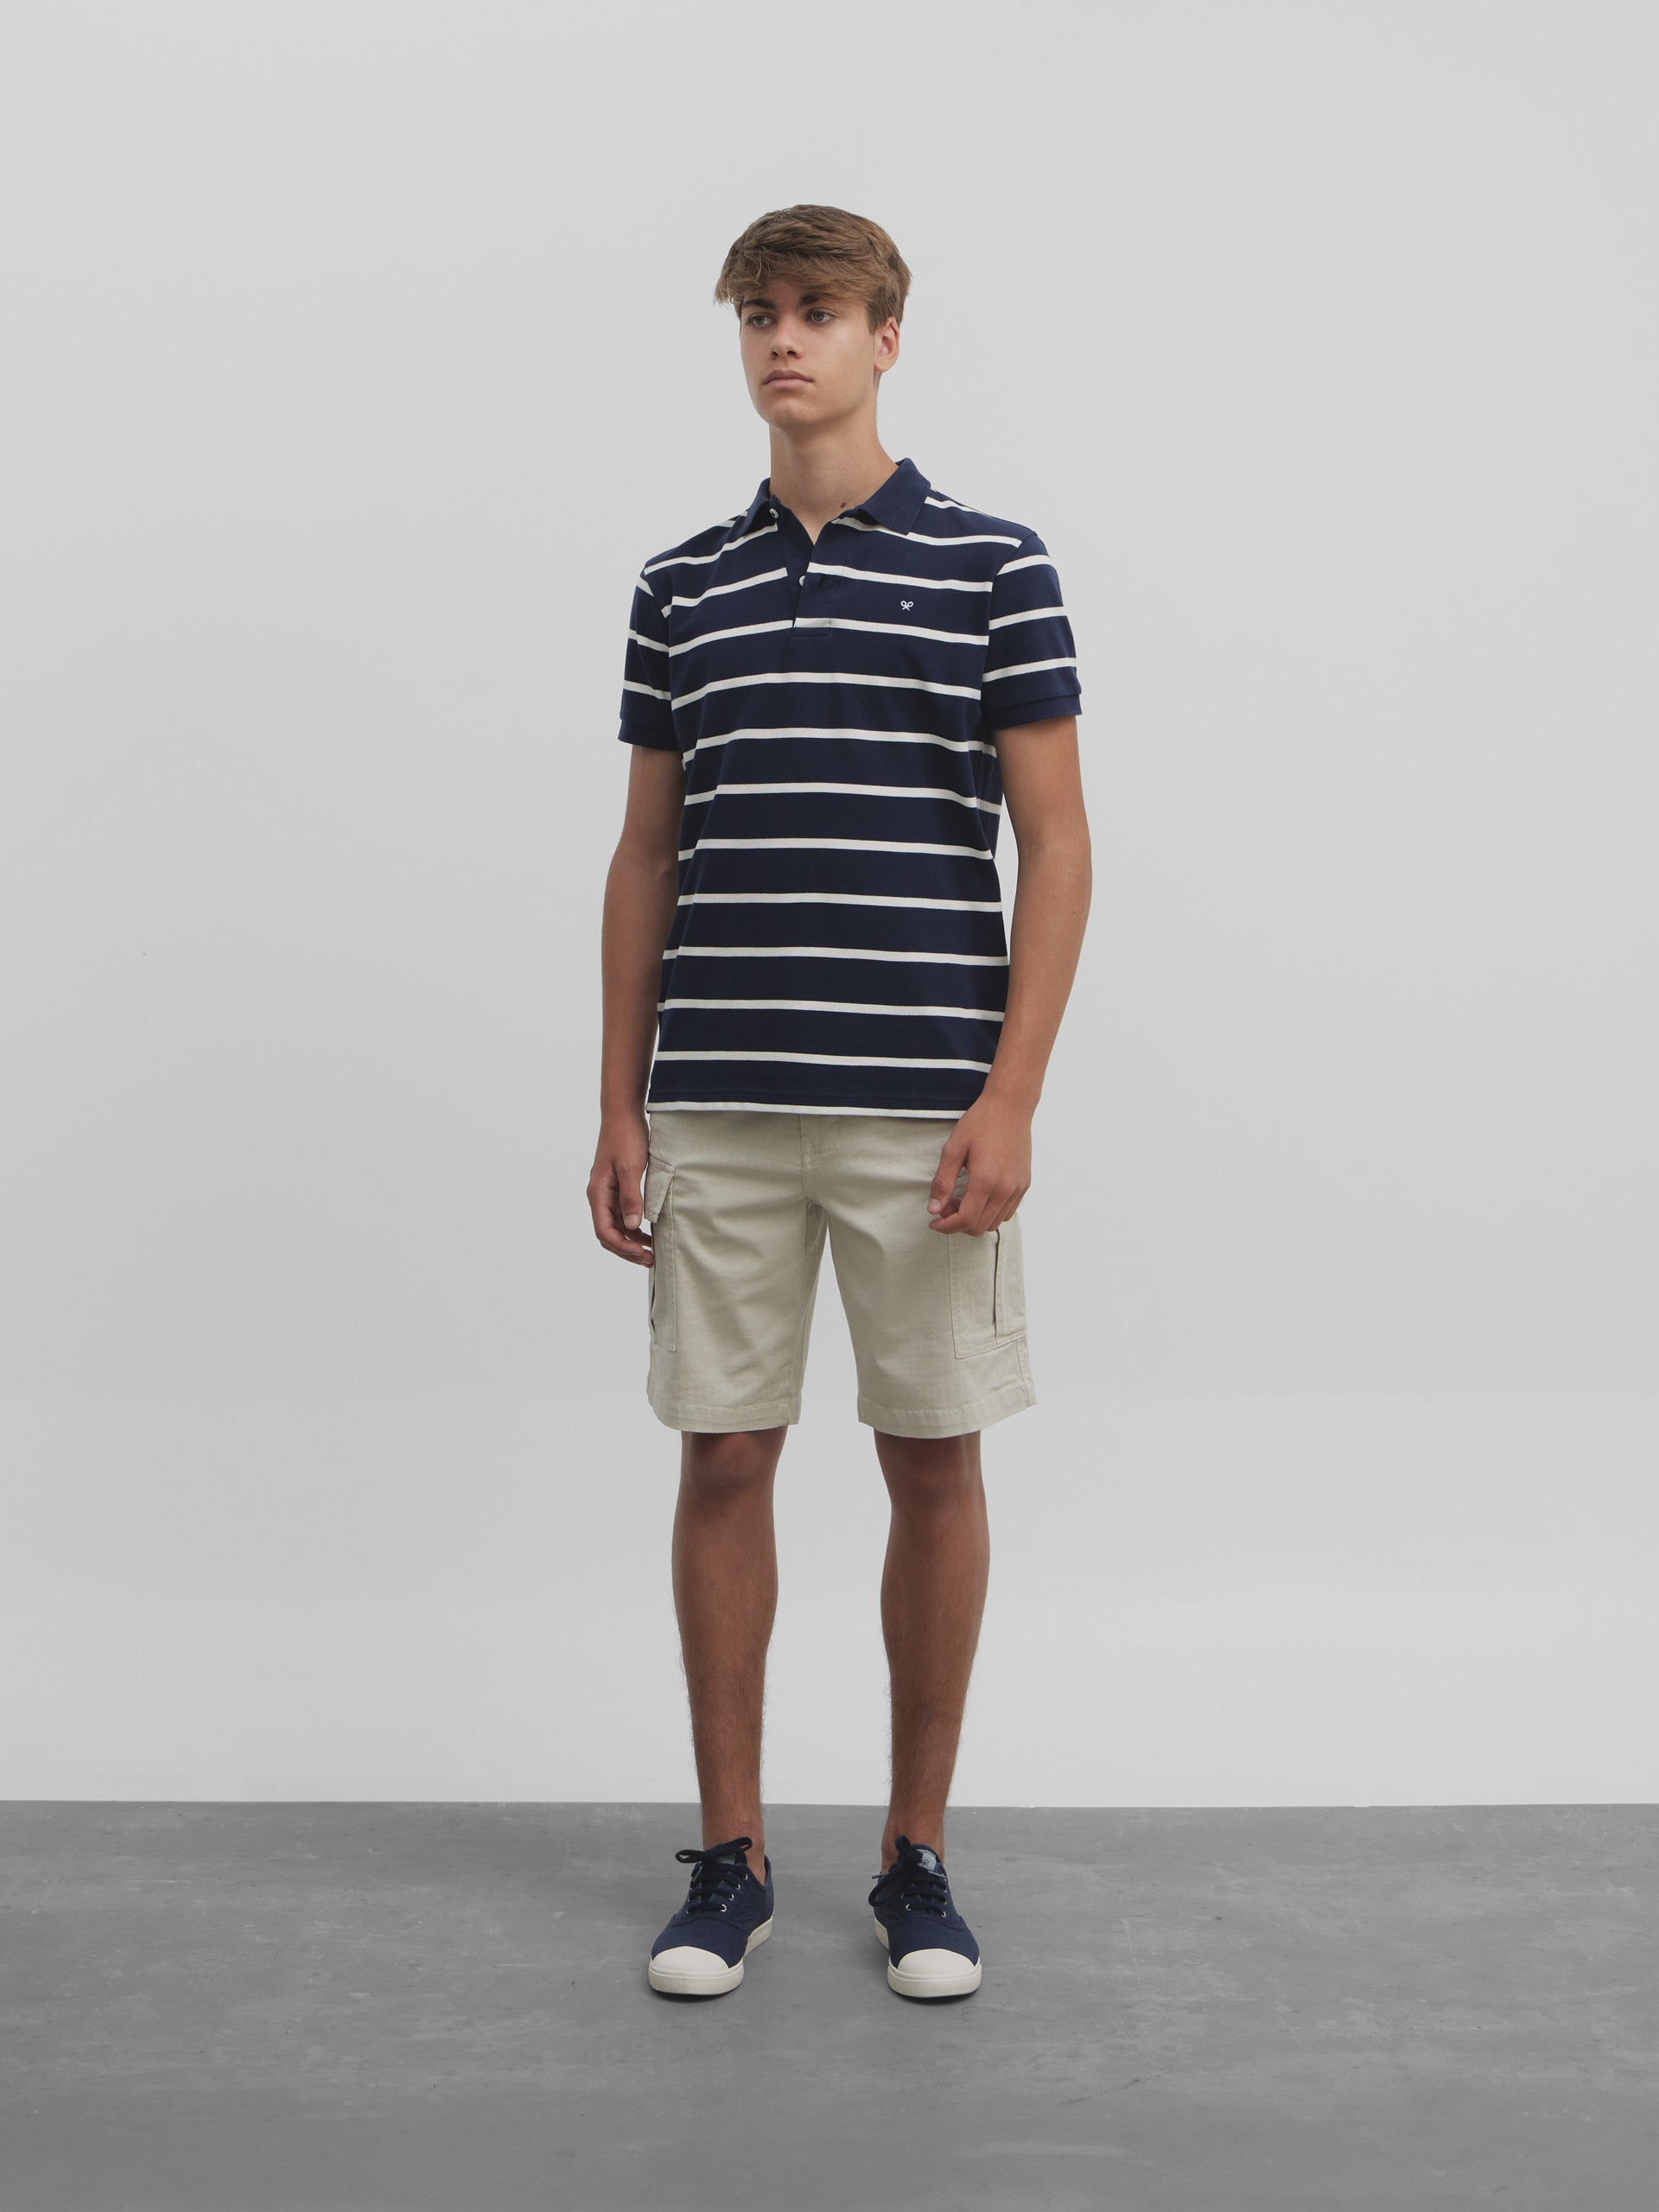 Classic navy blue nautical stripe polo shirt